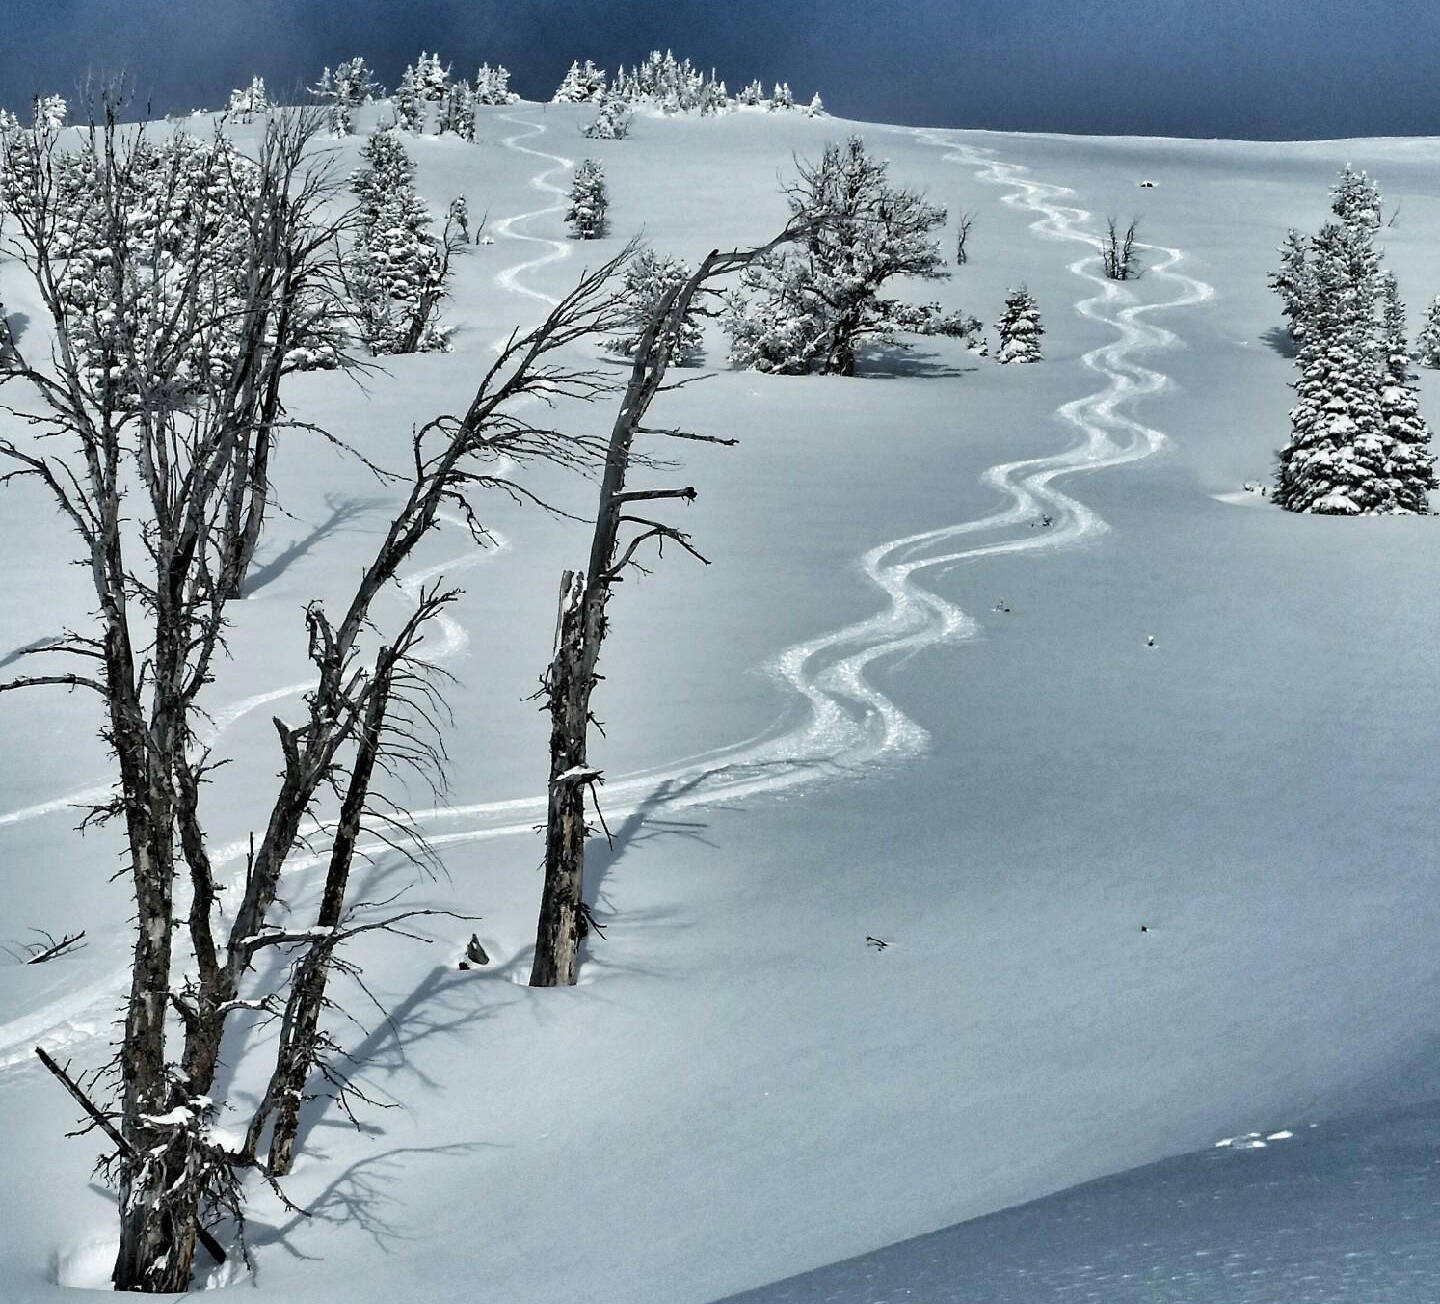 Three ski tracks through trees